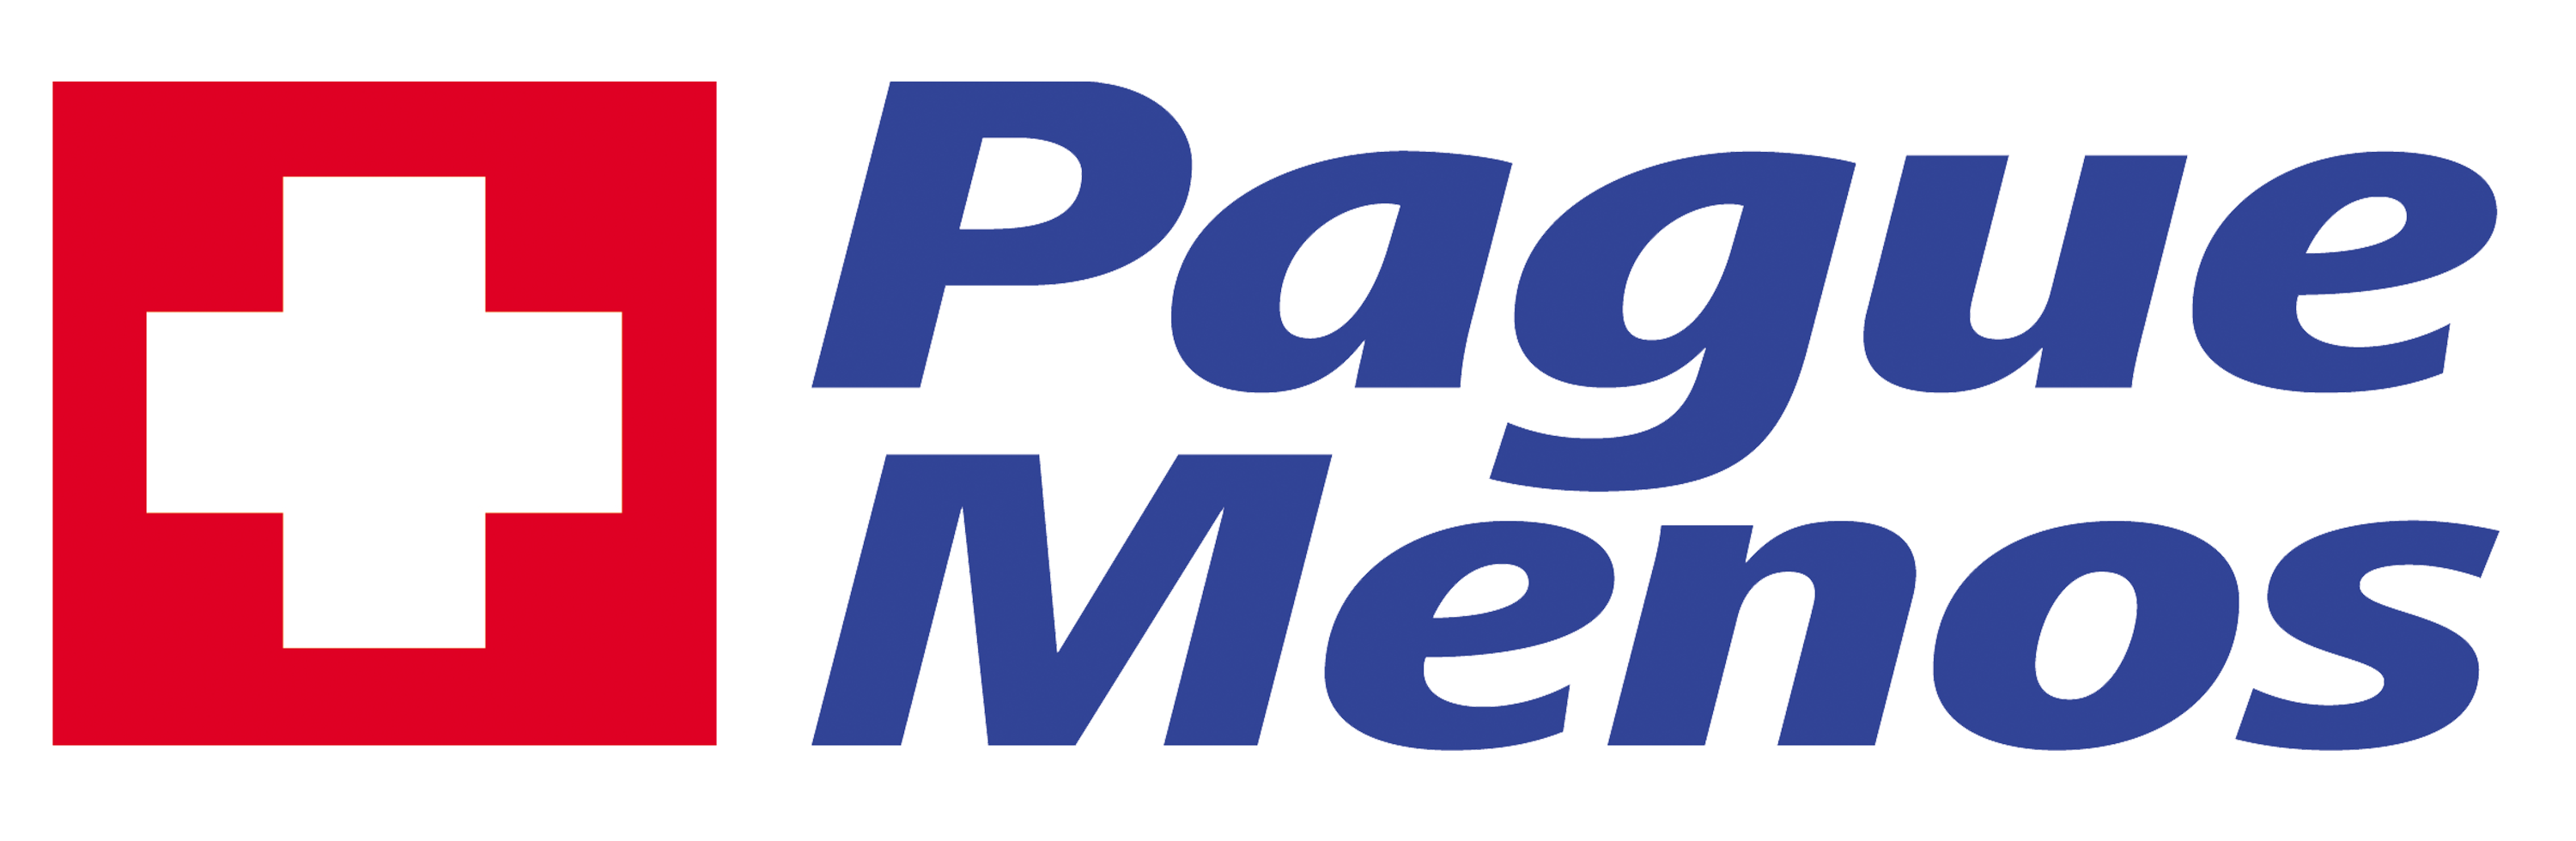 Farmacia Pague Menos-Paulo VI